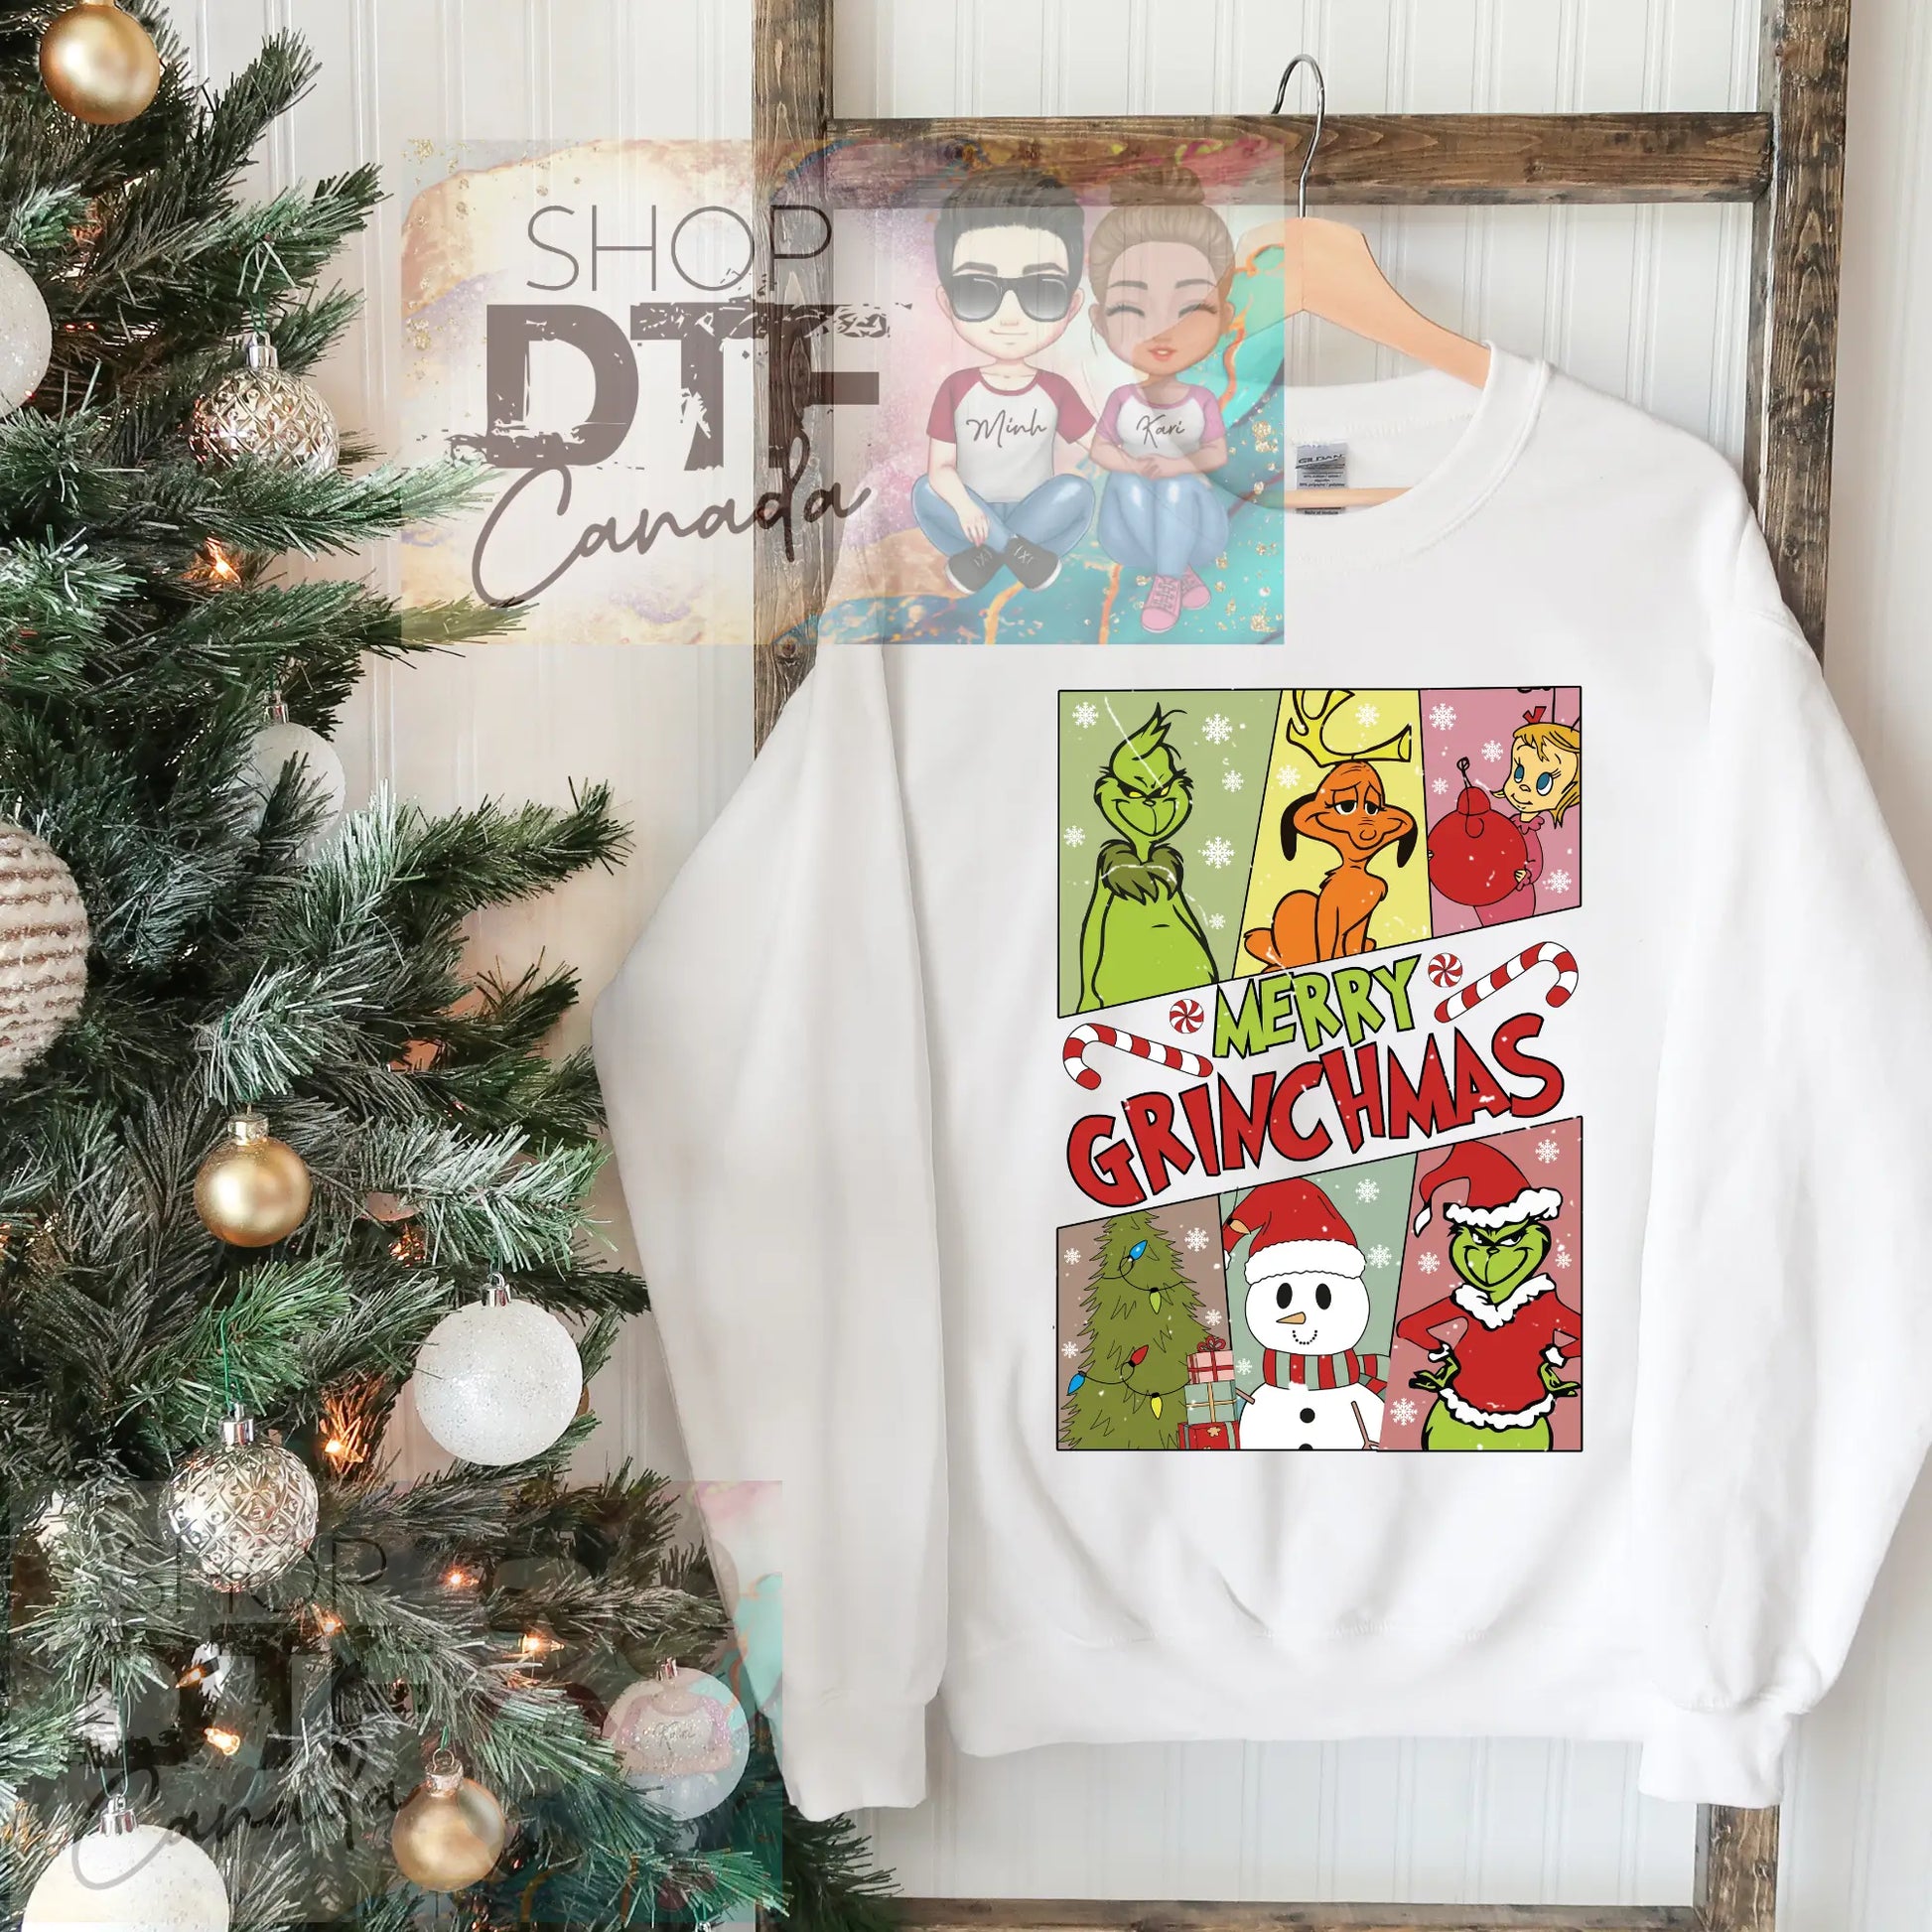 Christmas - Grinch - vintage merry grinchmas - Shirts & Tops